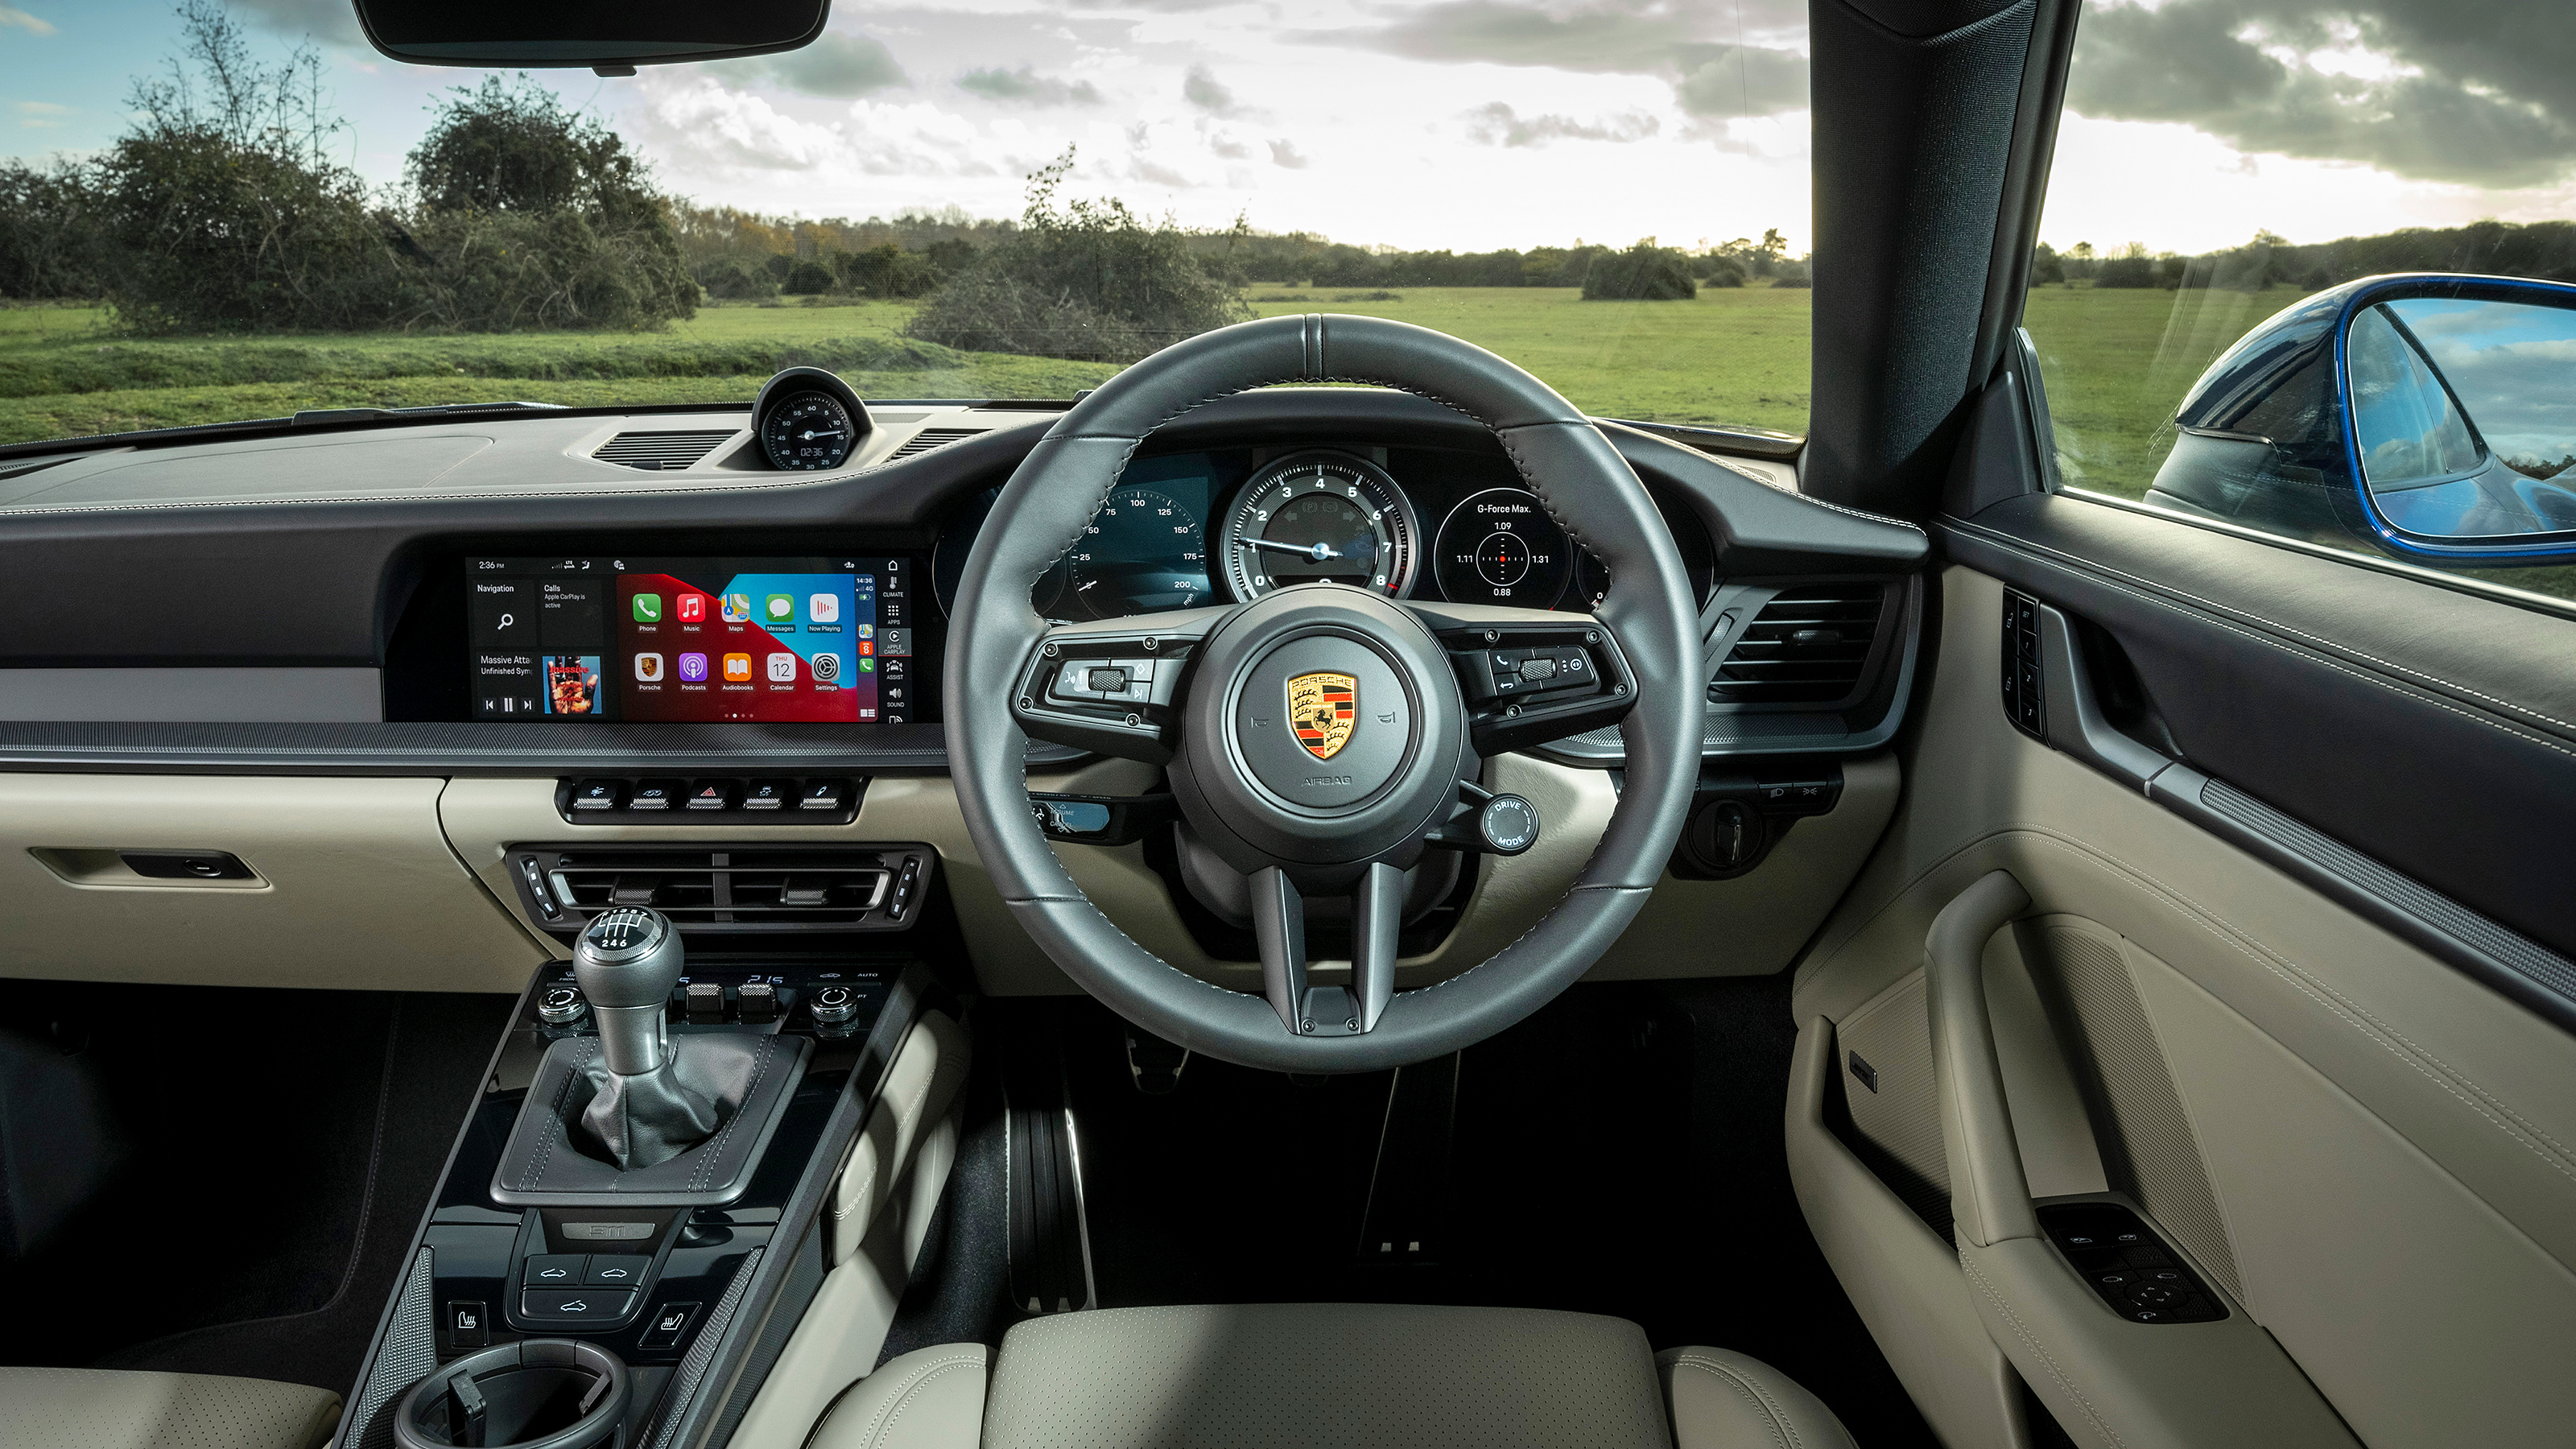 Porsche 911 review - interior and tech | evo